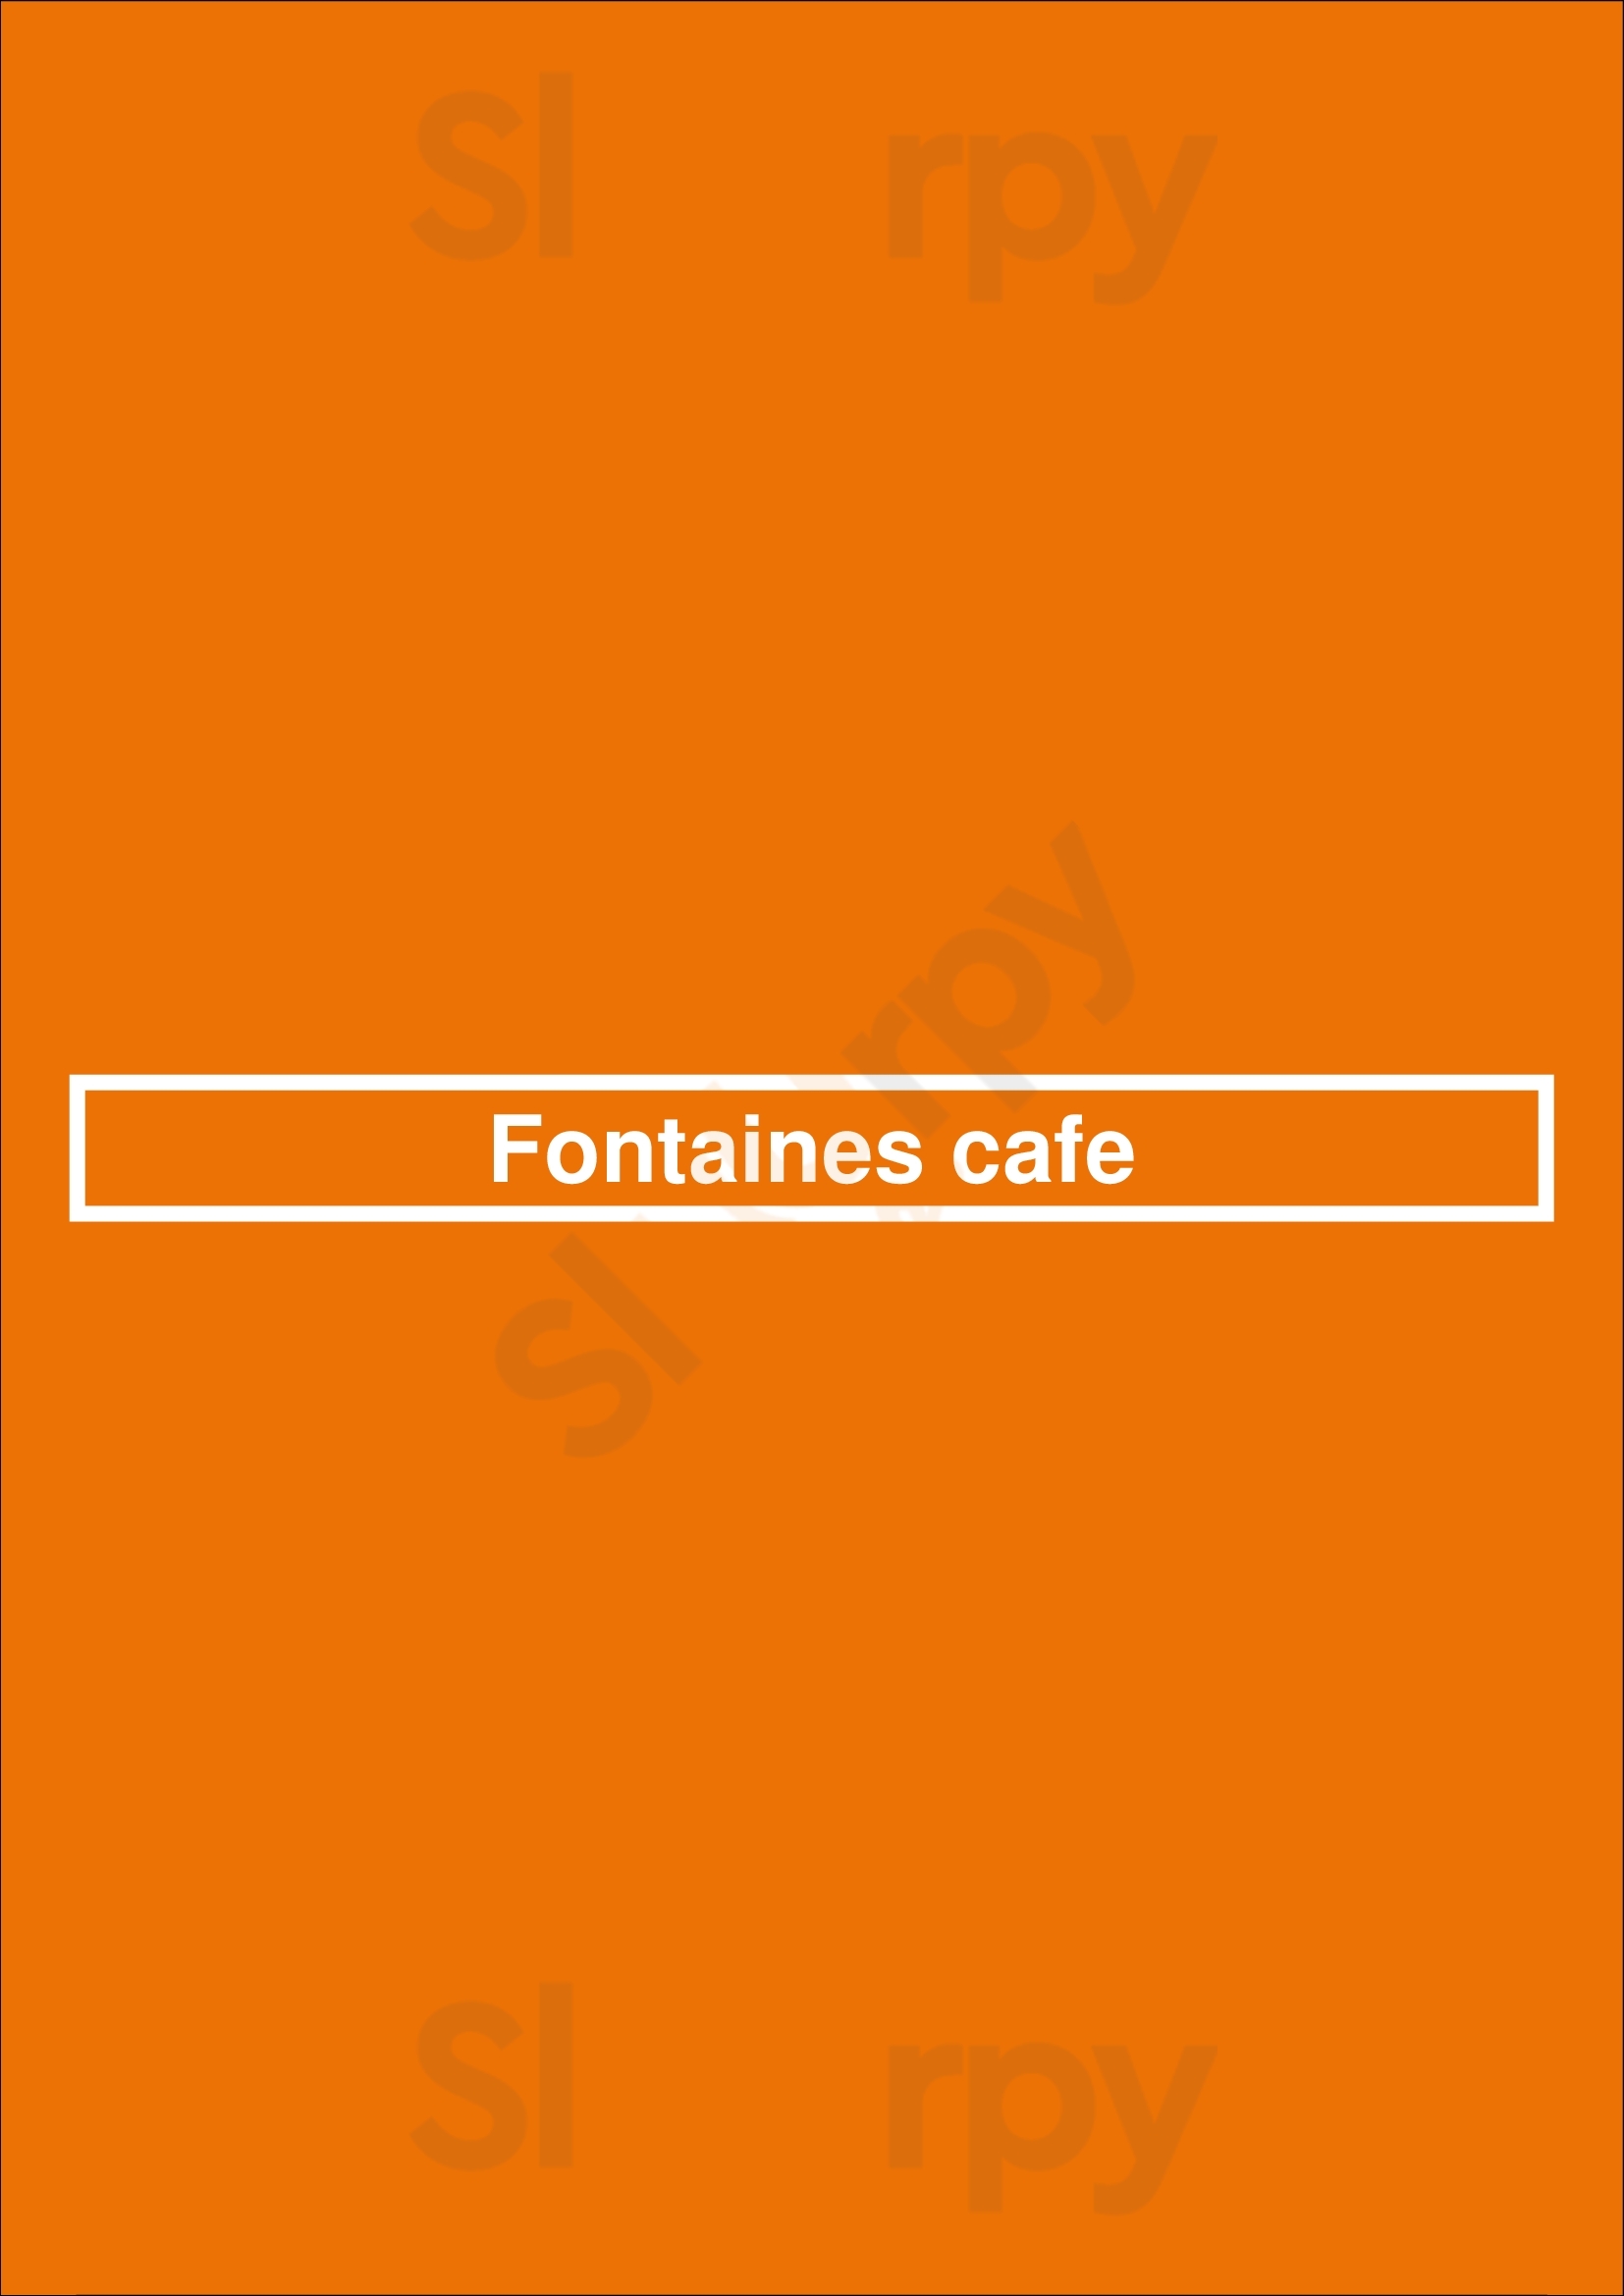 Fontaines Cafe Liverpool Menu - 1